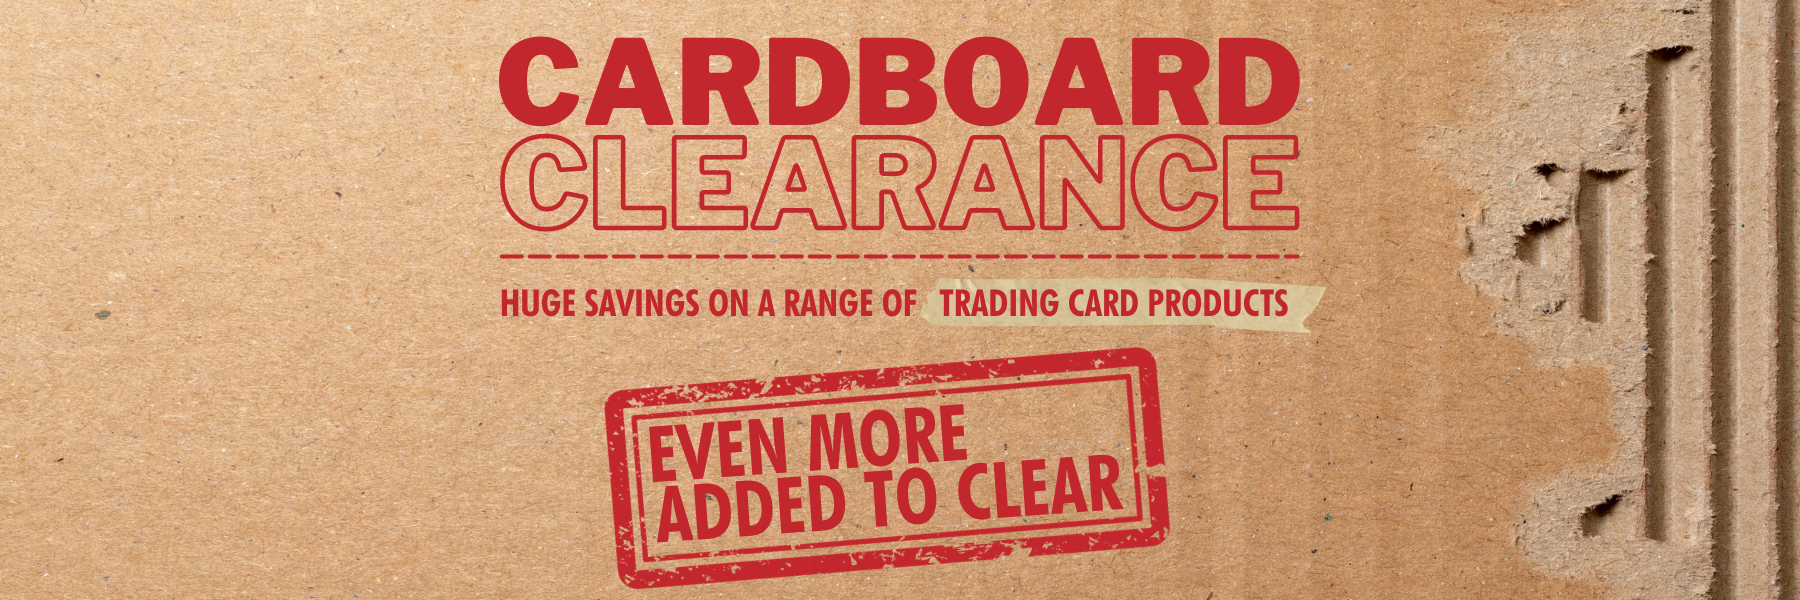 Cardboard Clearance